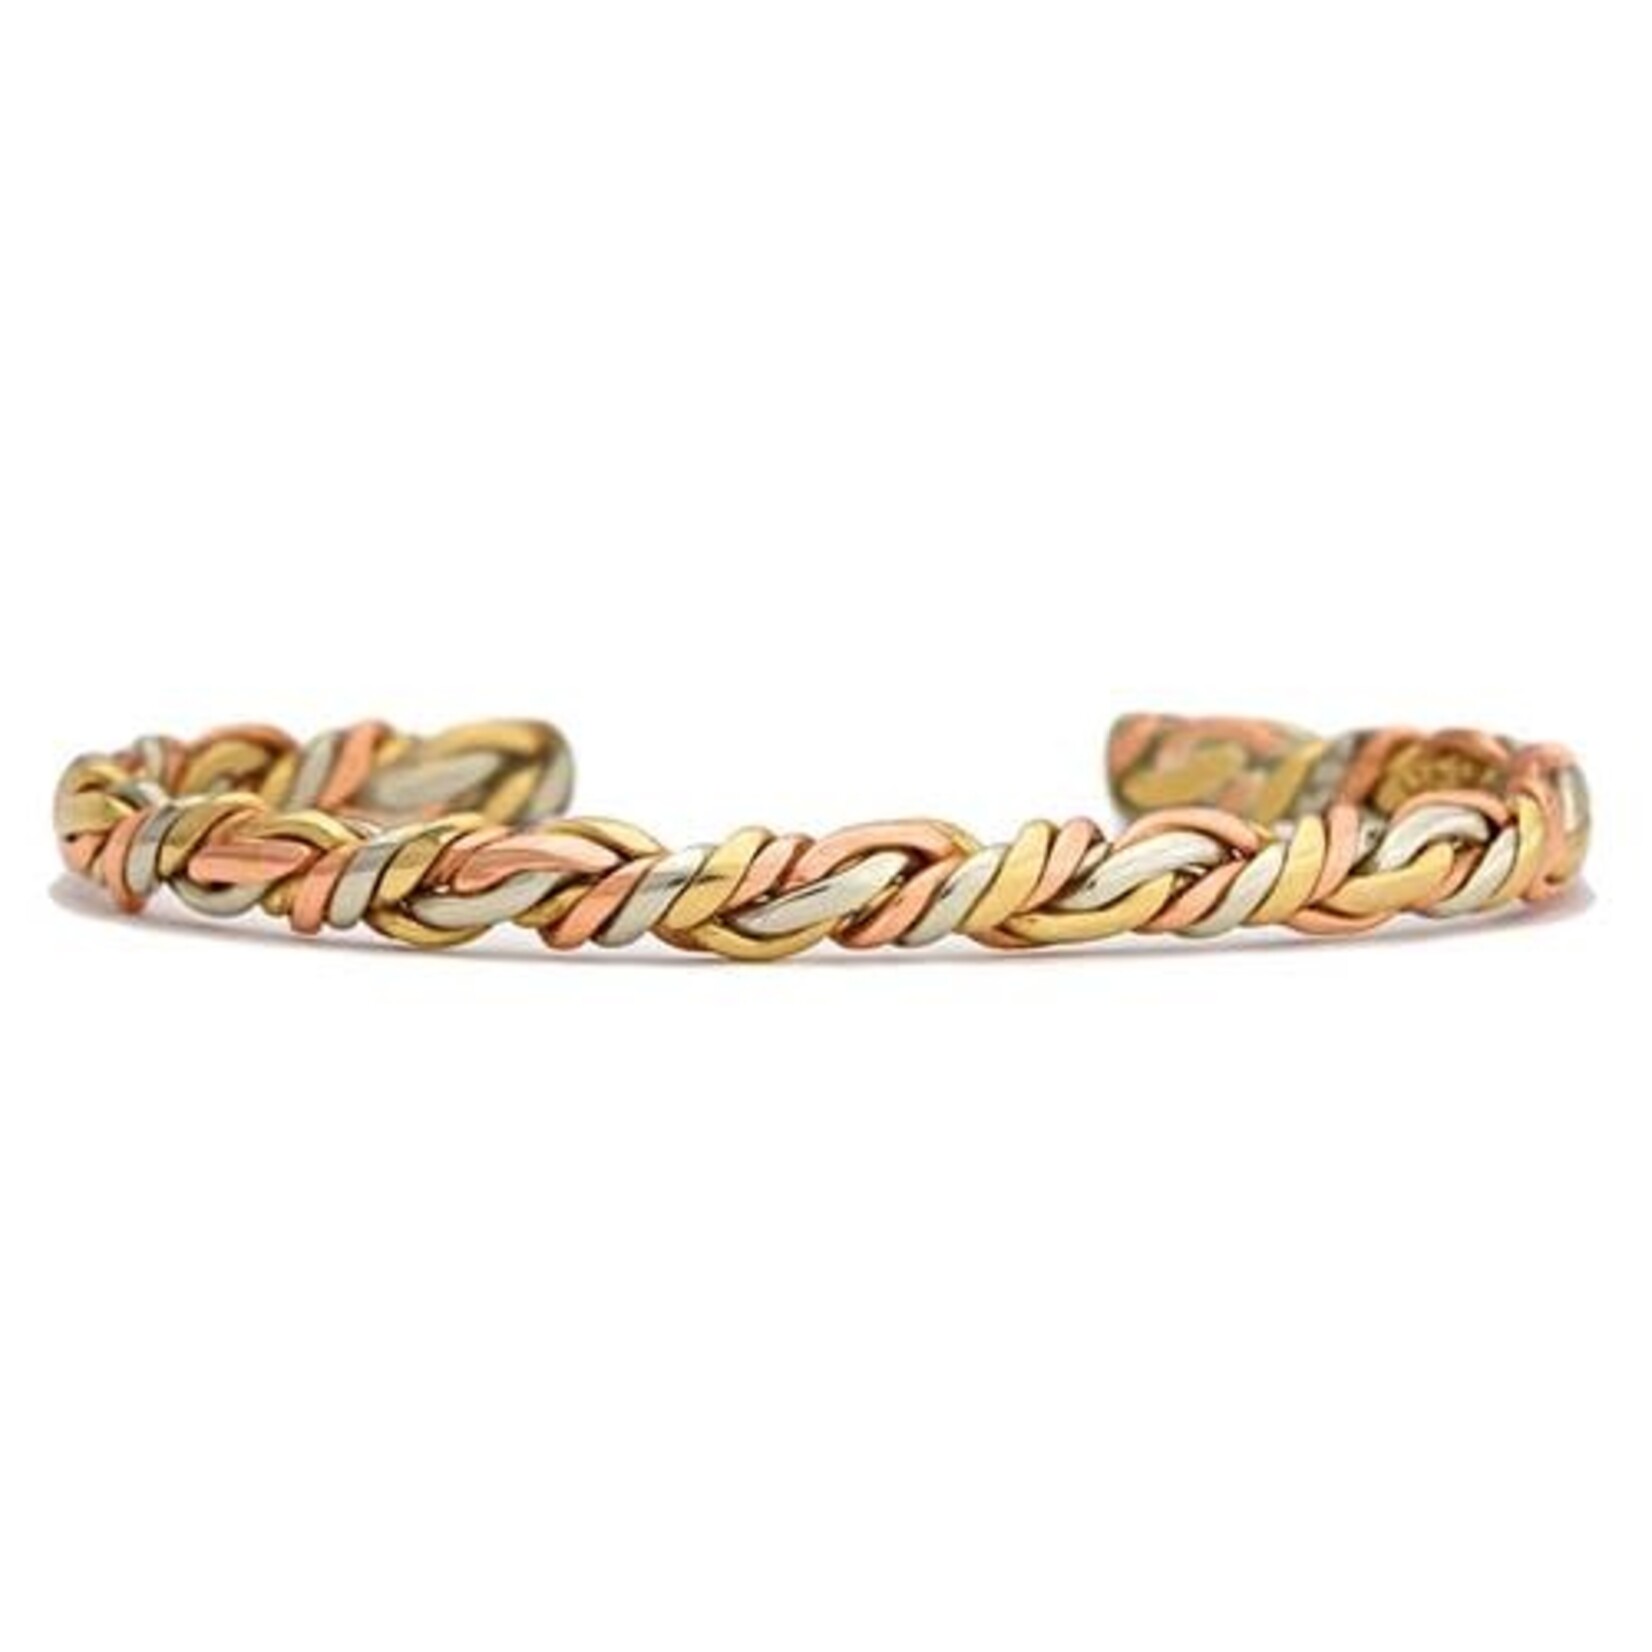 Sergio Lub Copper Bracelets Sergio Lub Copper Bracelets - $35